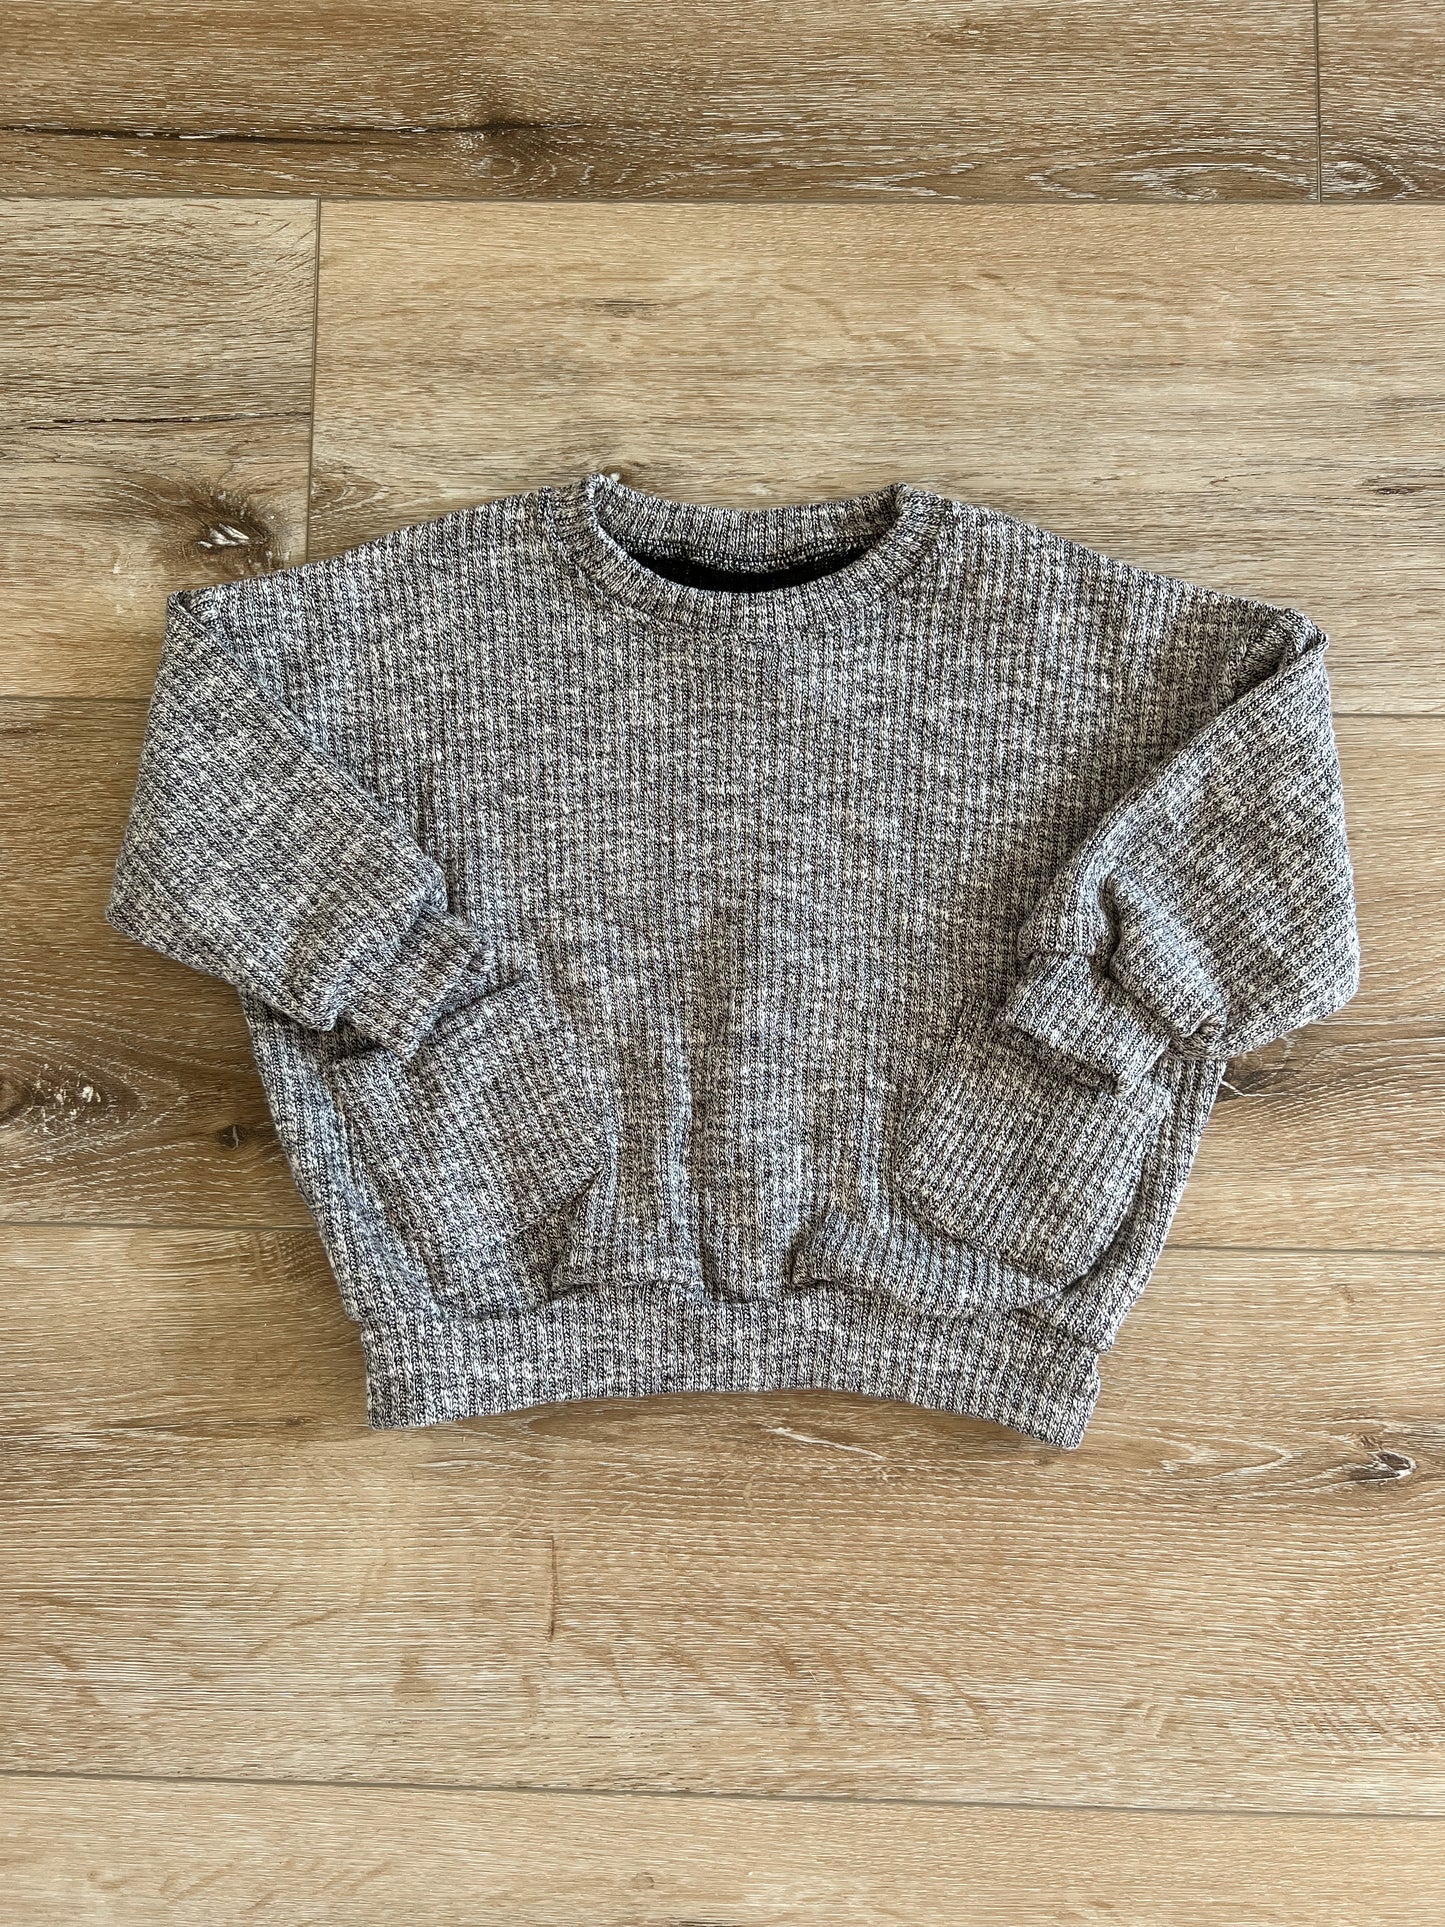 Knit Sweaters